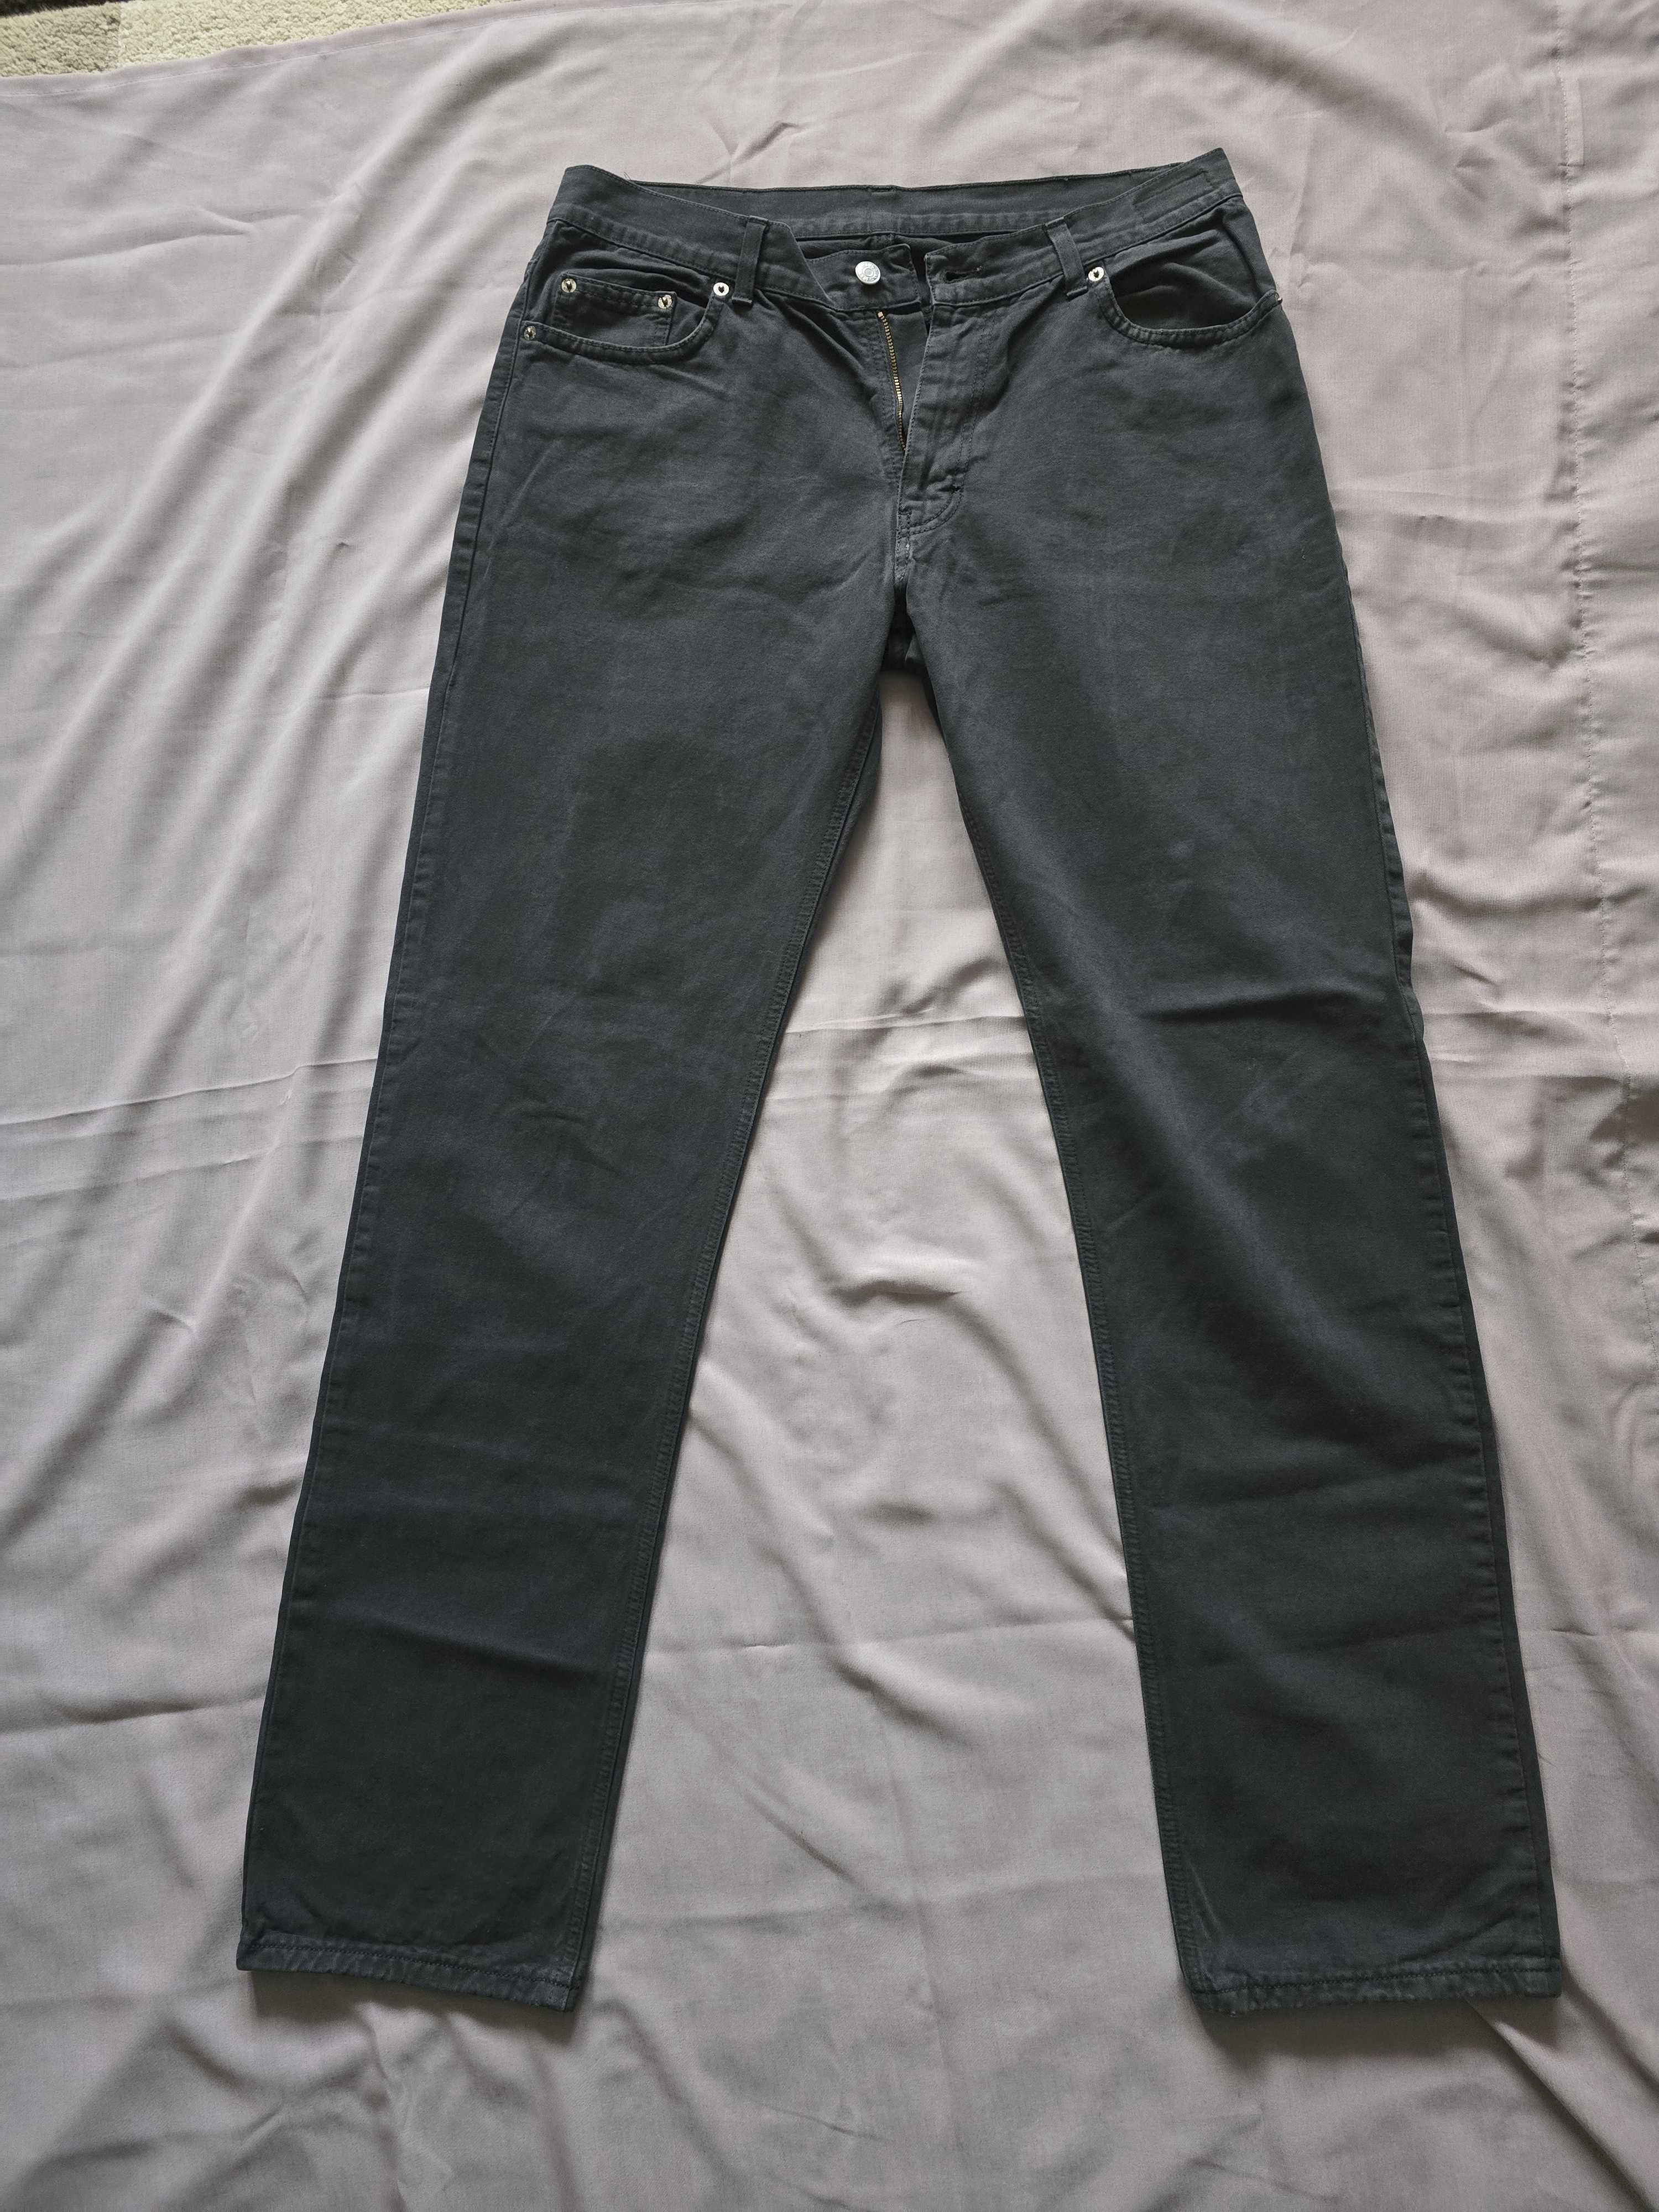 Blugi/Jeans/Pantaloni BOGGI IT Marime 52 (echivalent W32-33 L34) Gri